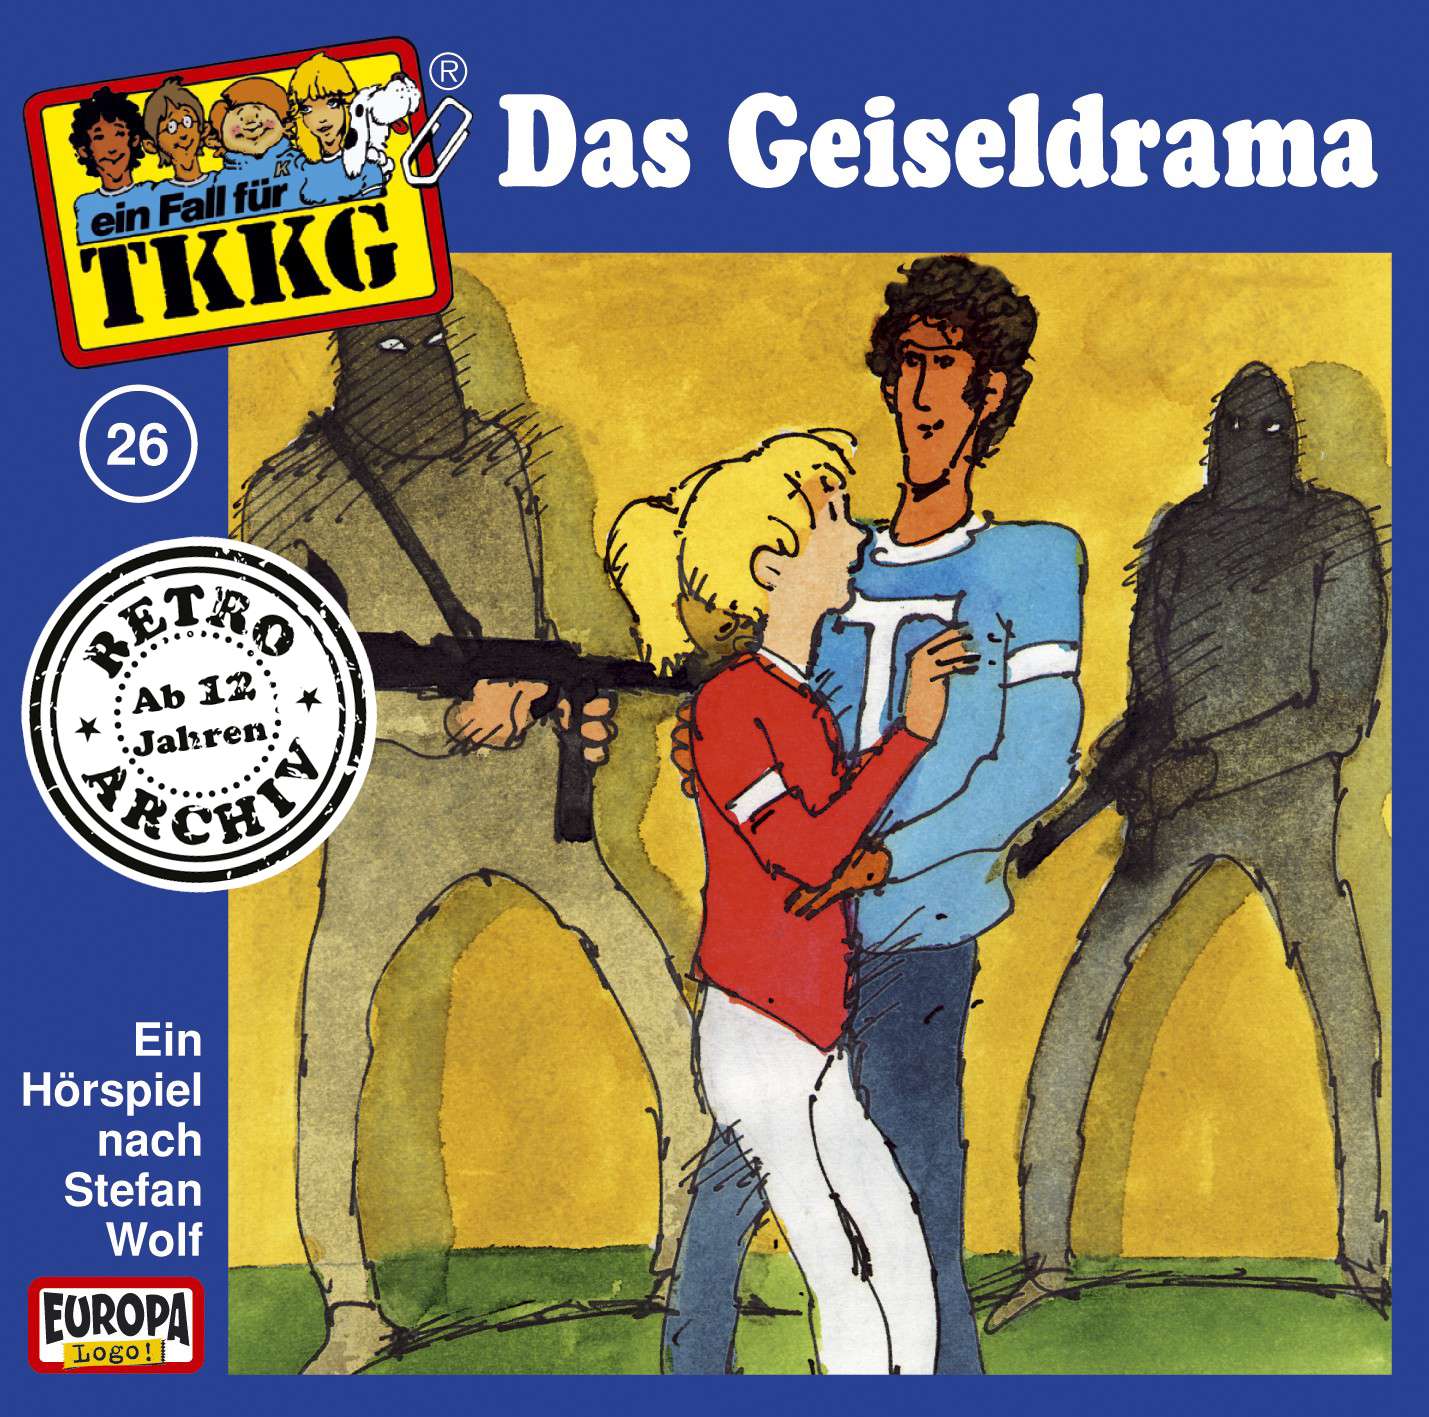 TKKG Retro-Archiv: Das Geiseldrama